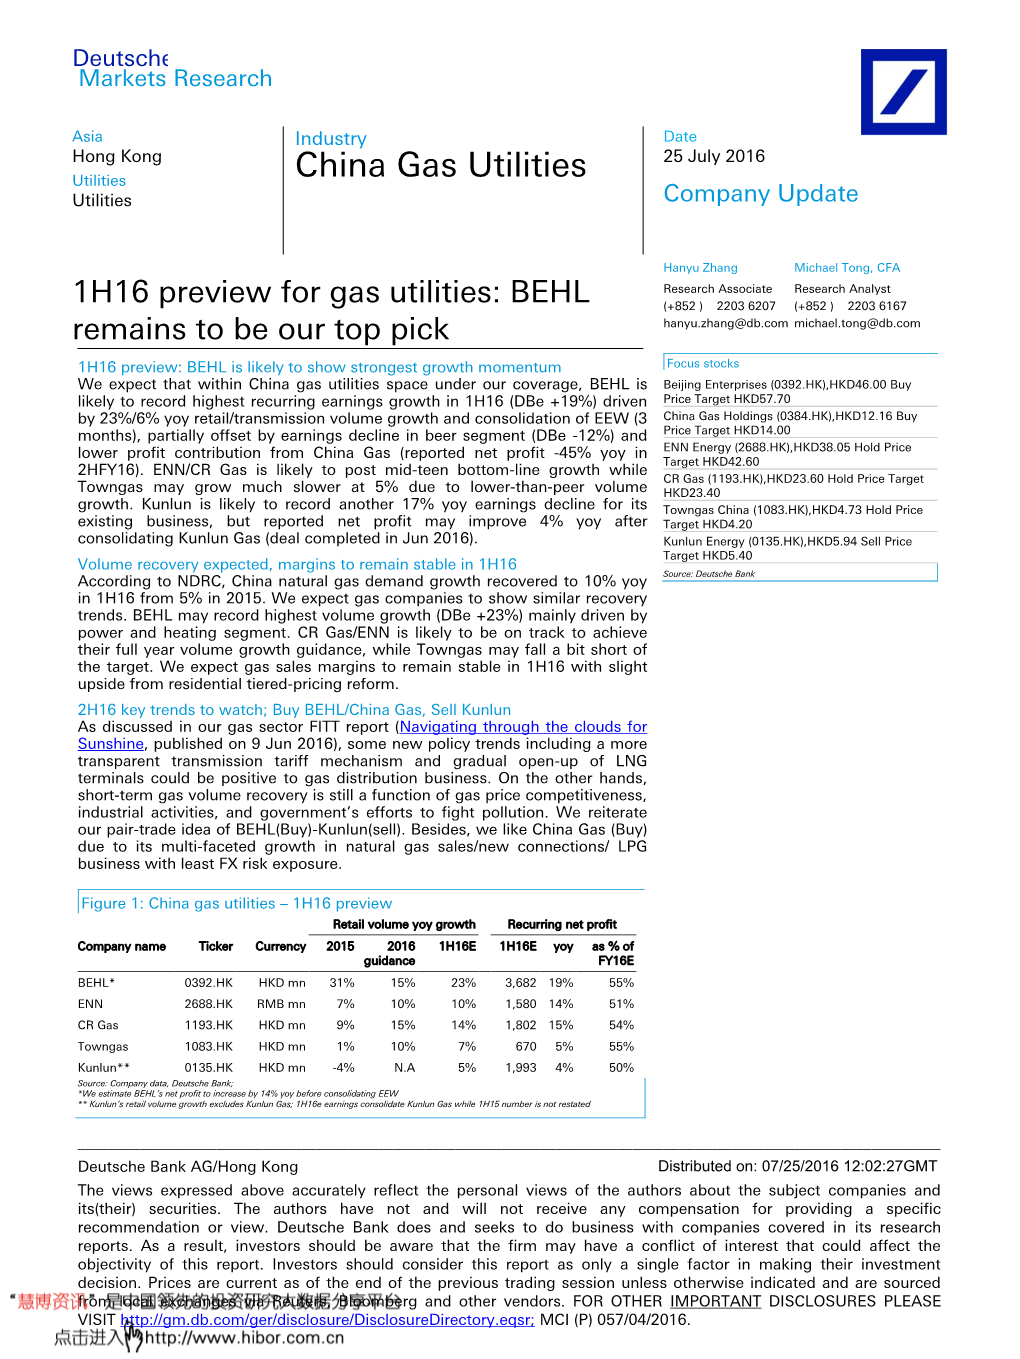 China Gas Utilities Utilities Company Update